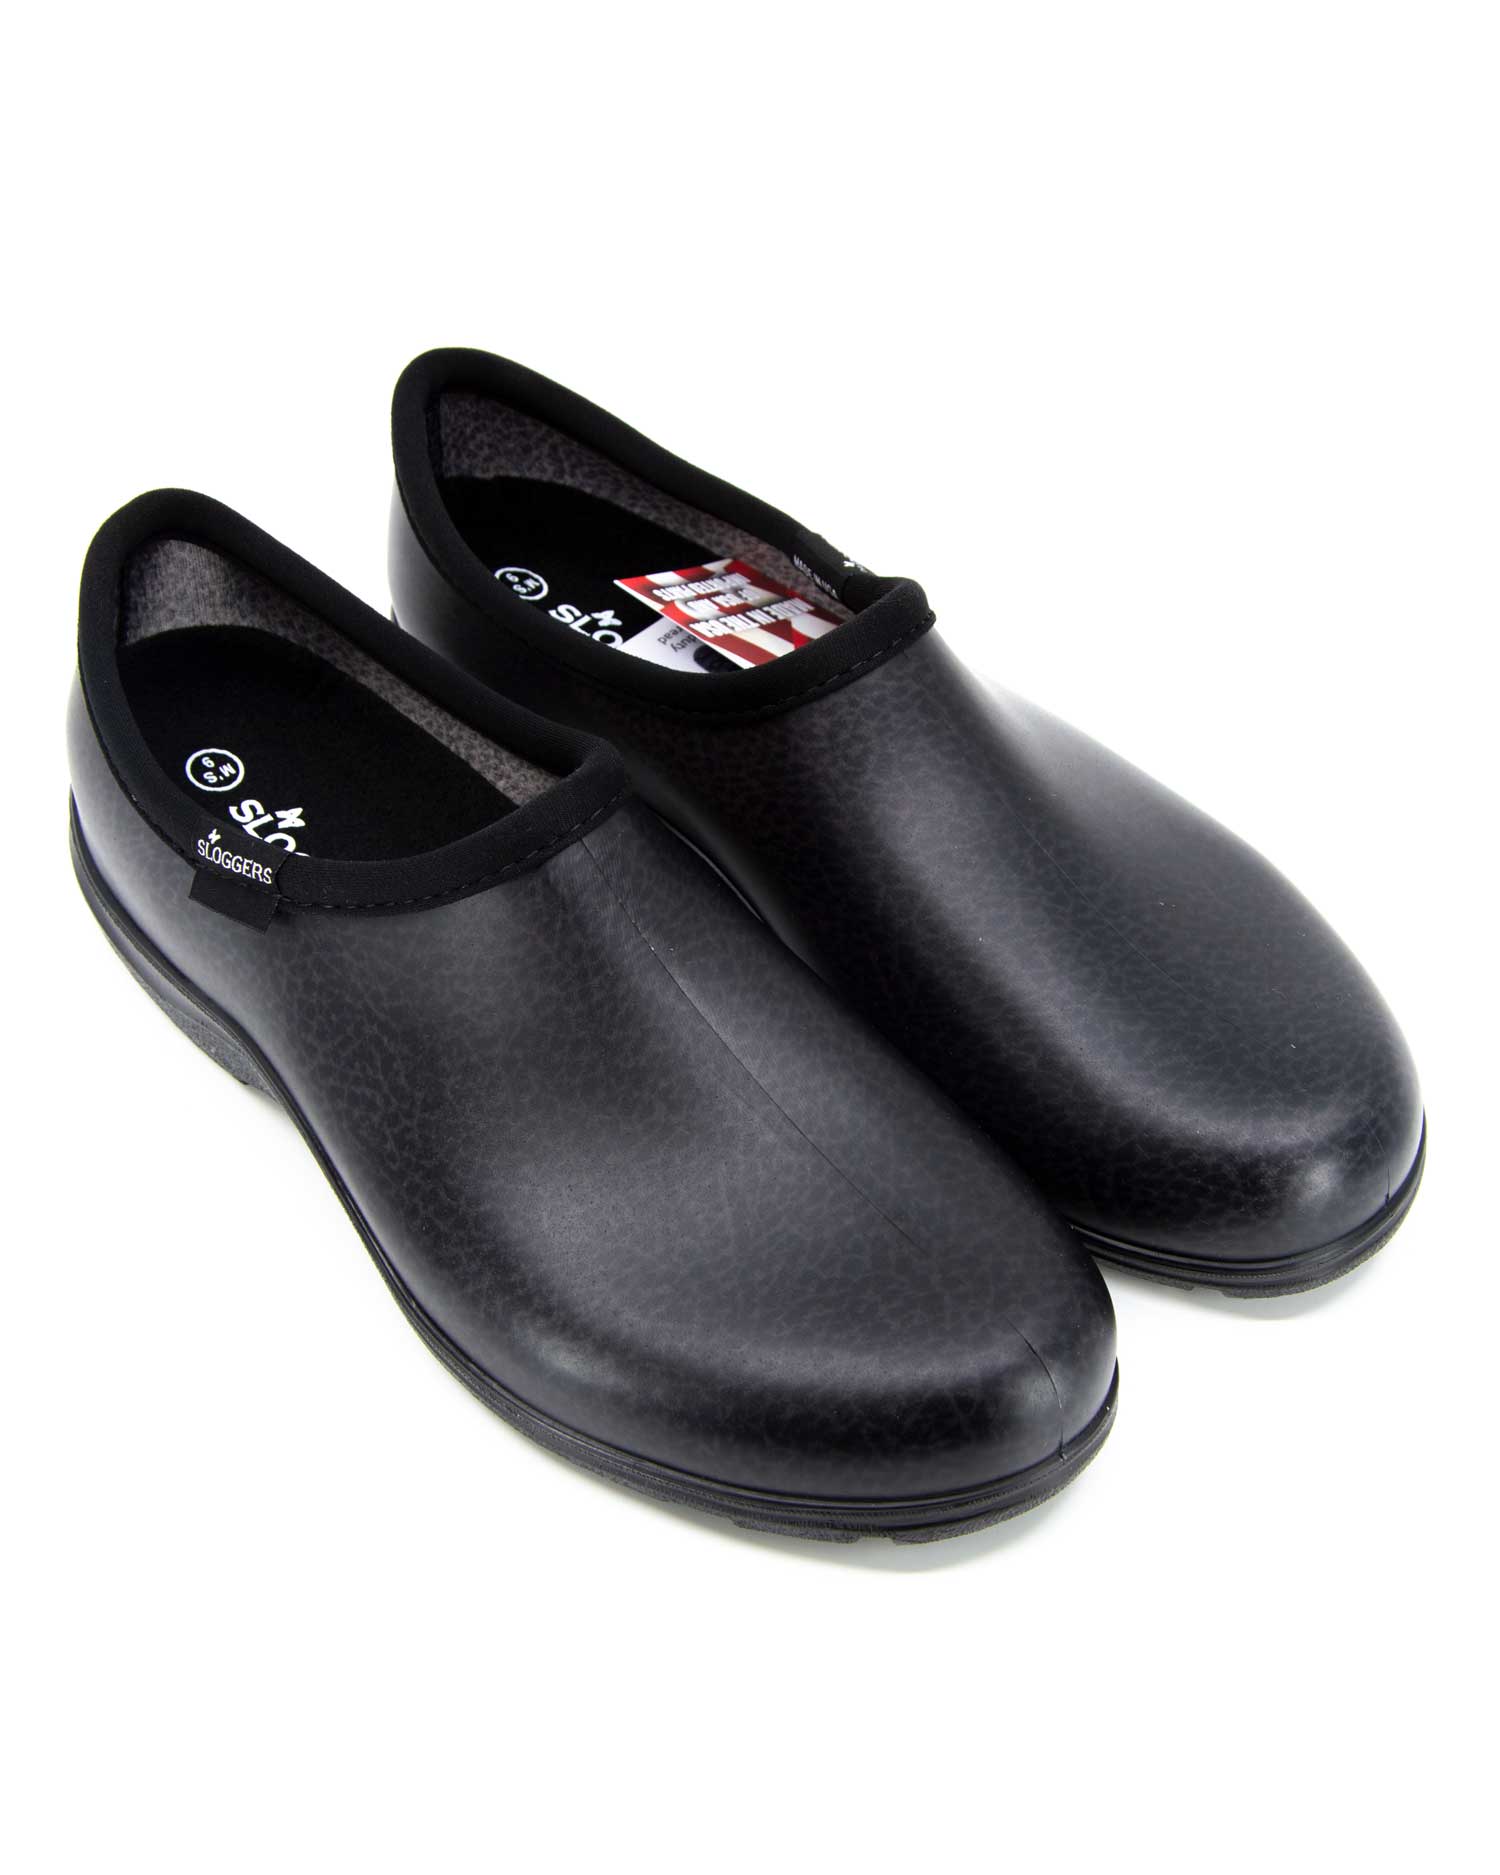 Mens Comfort Shoe Black